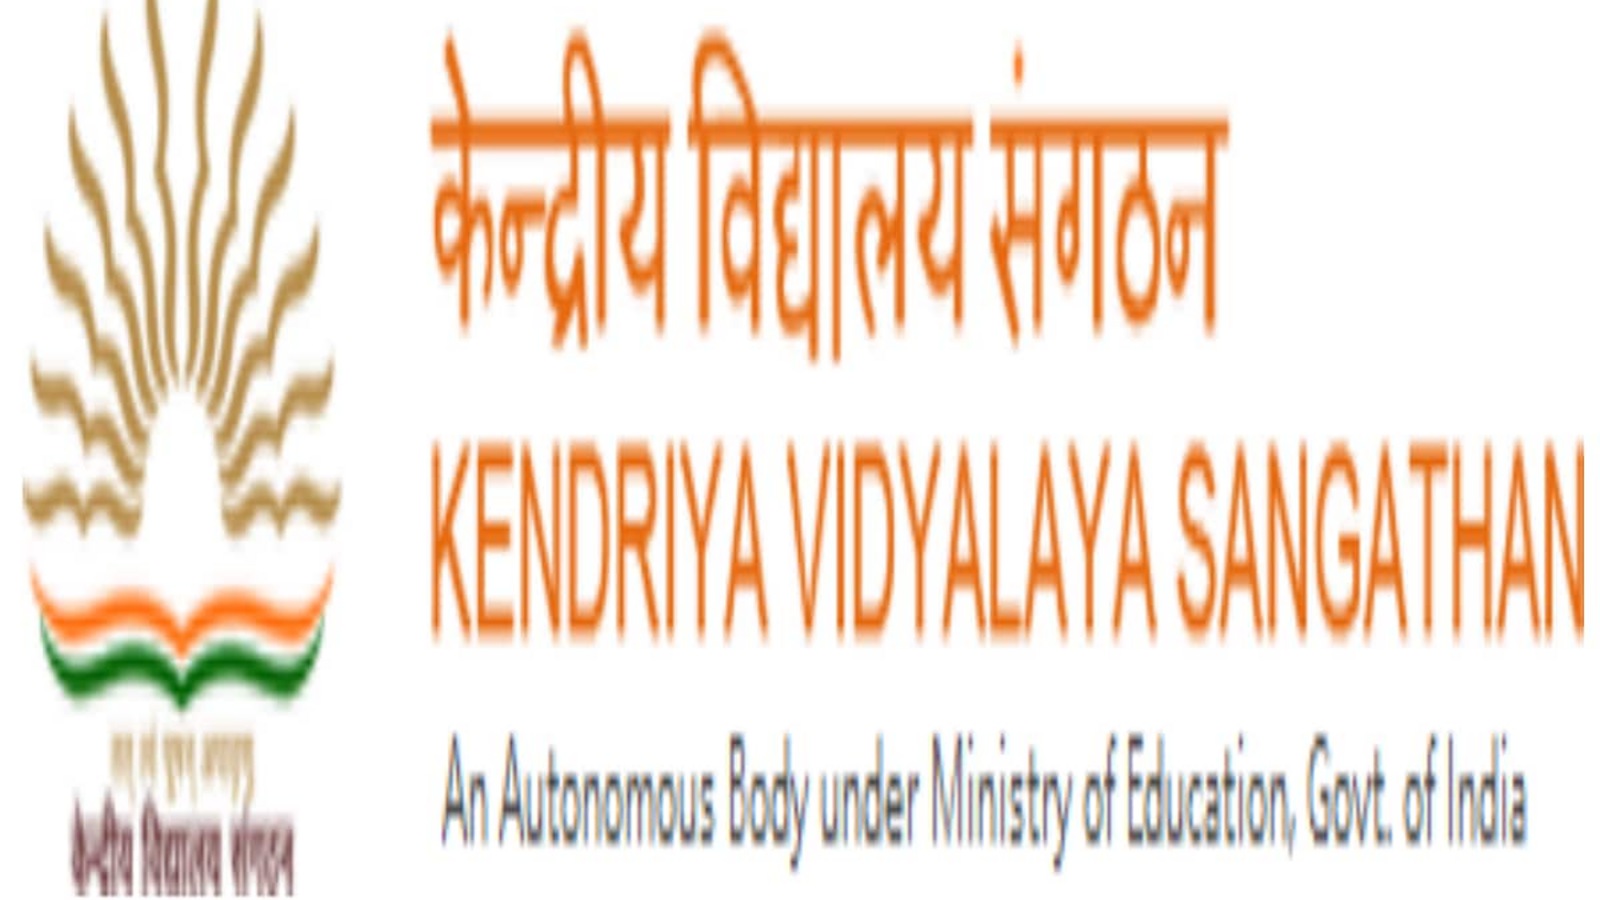 Kendriyavidyalayasangathan.com » Free Educational Website